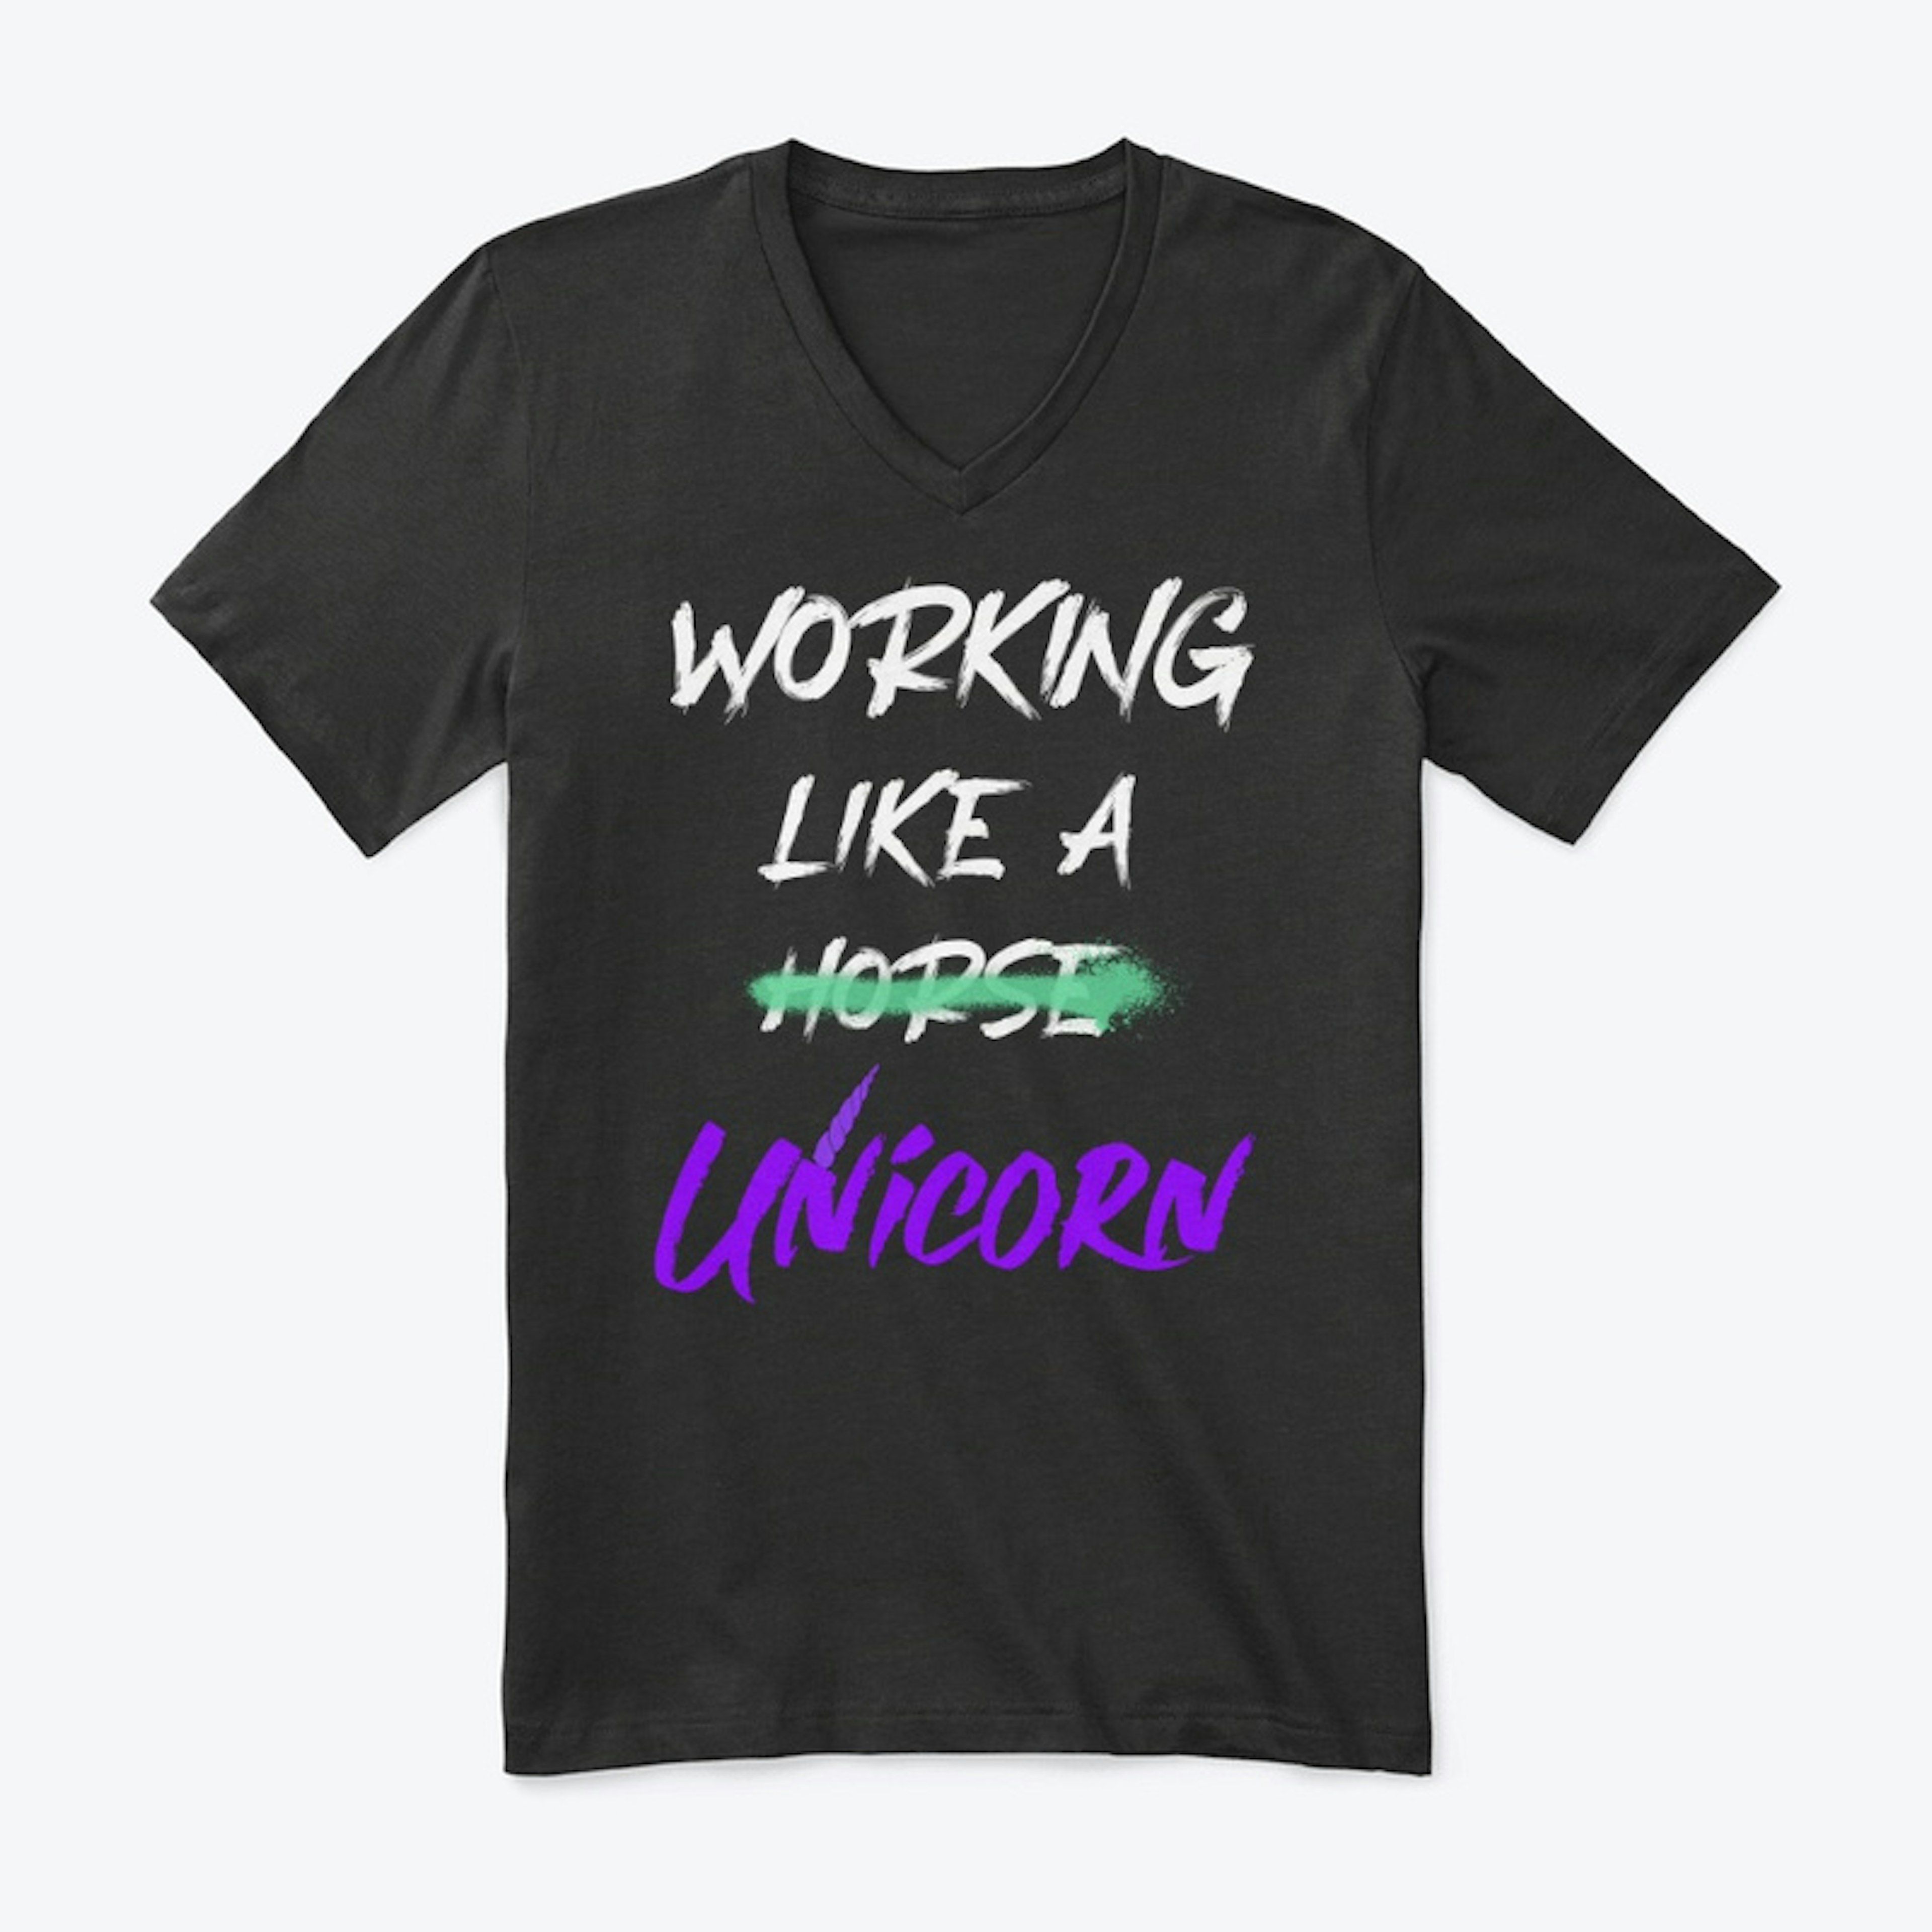 Working like a...unicorn 2